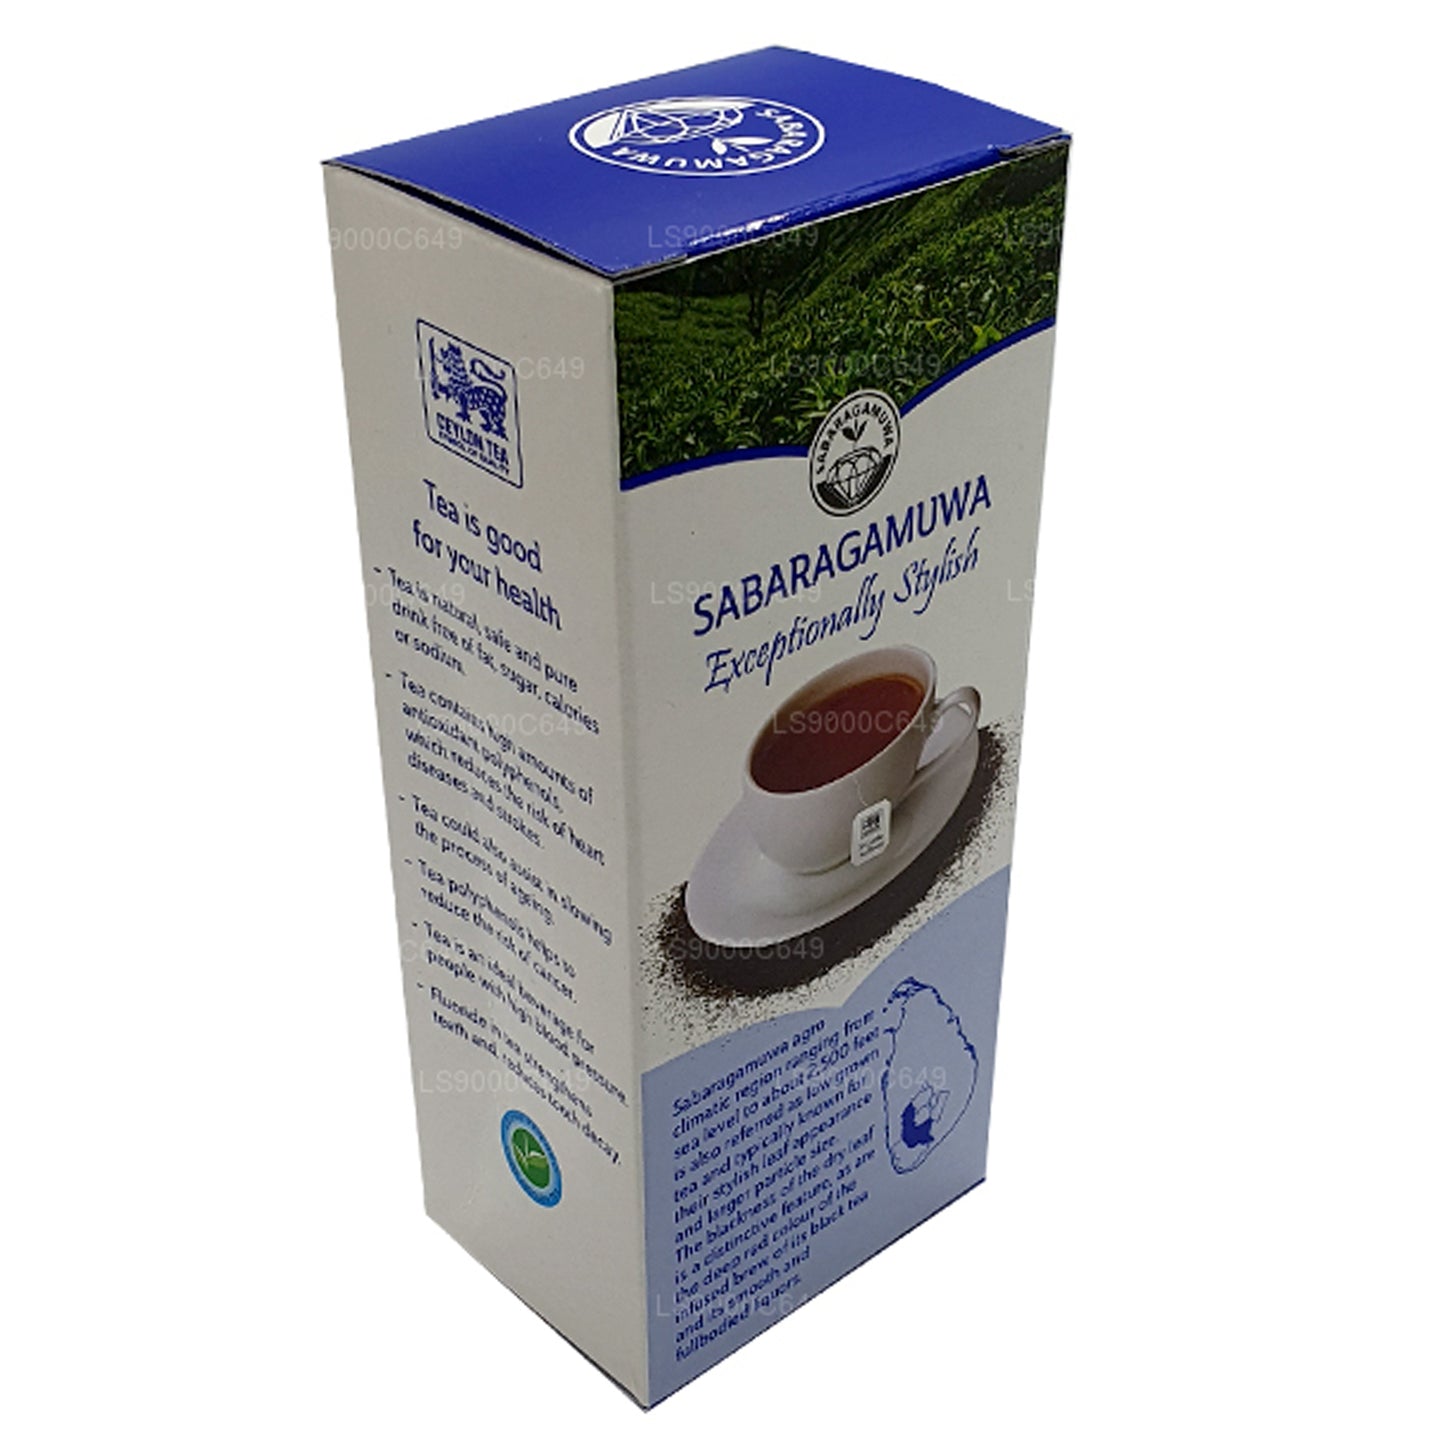 Lakpura Single Region Sabaragamuwa černý čaj